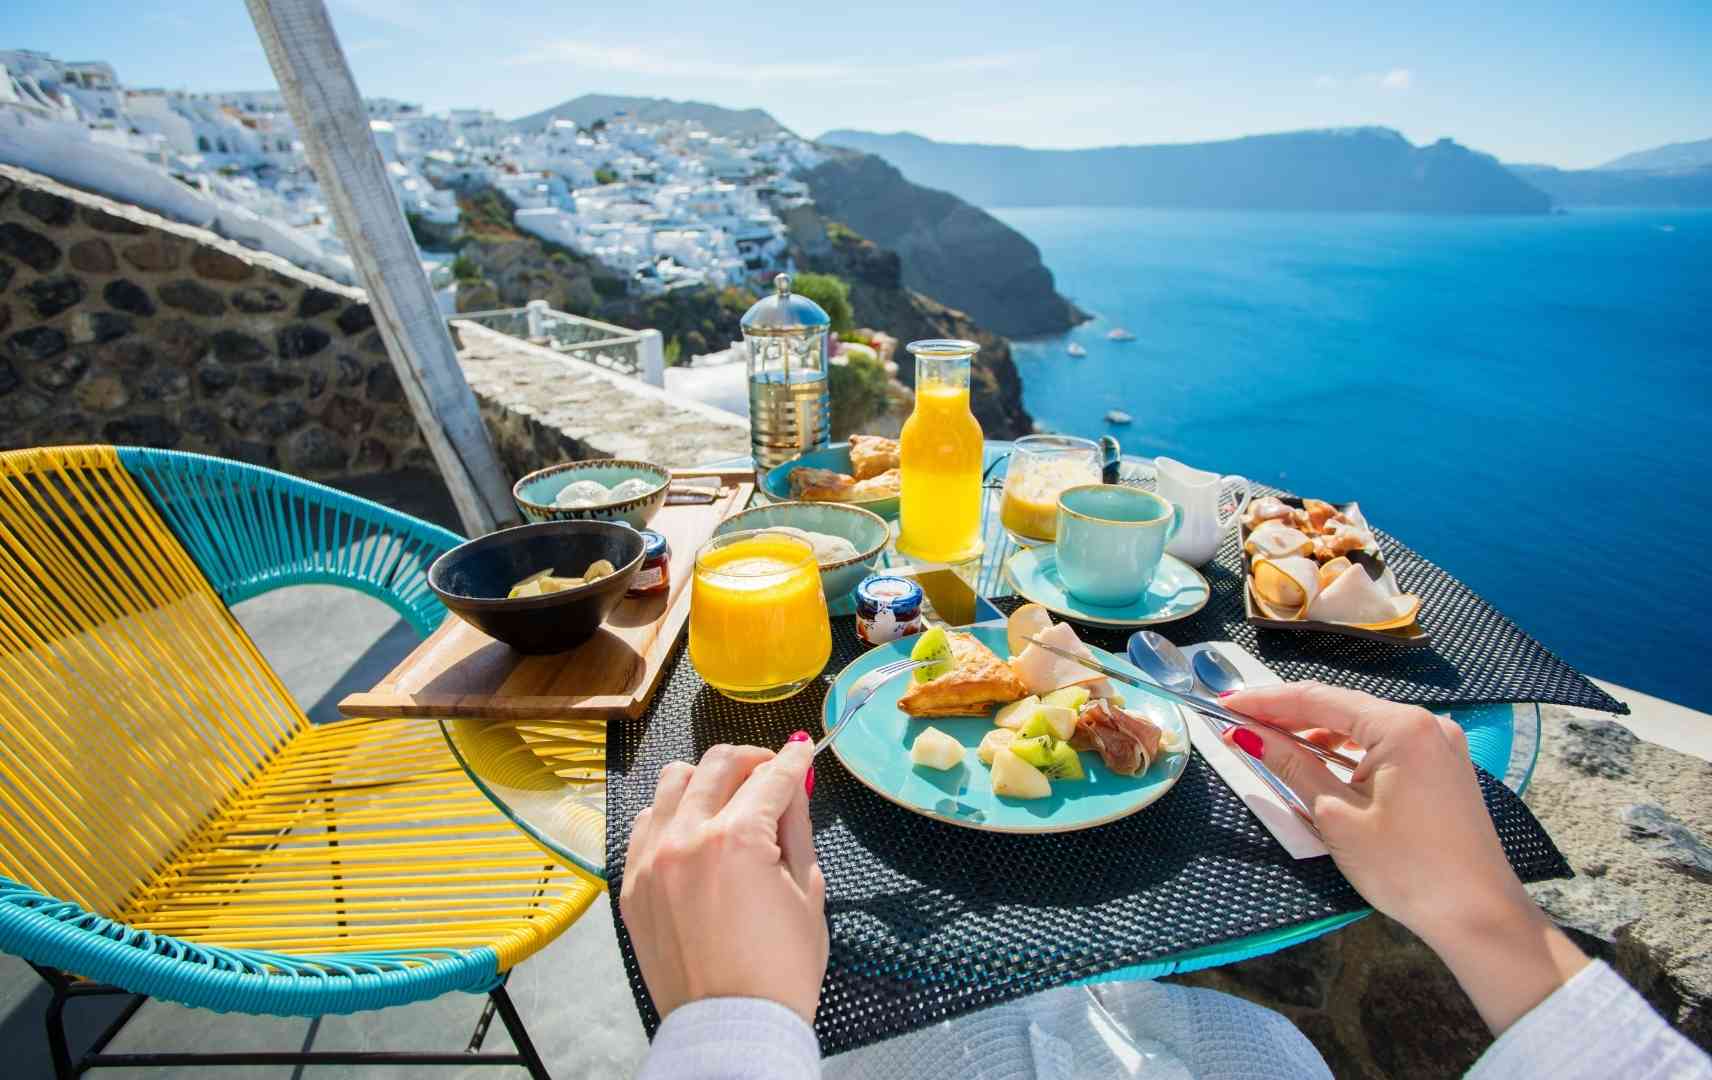 Frau beim Frühstück im Urlaub mit Meerblick